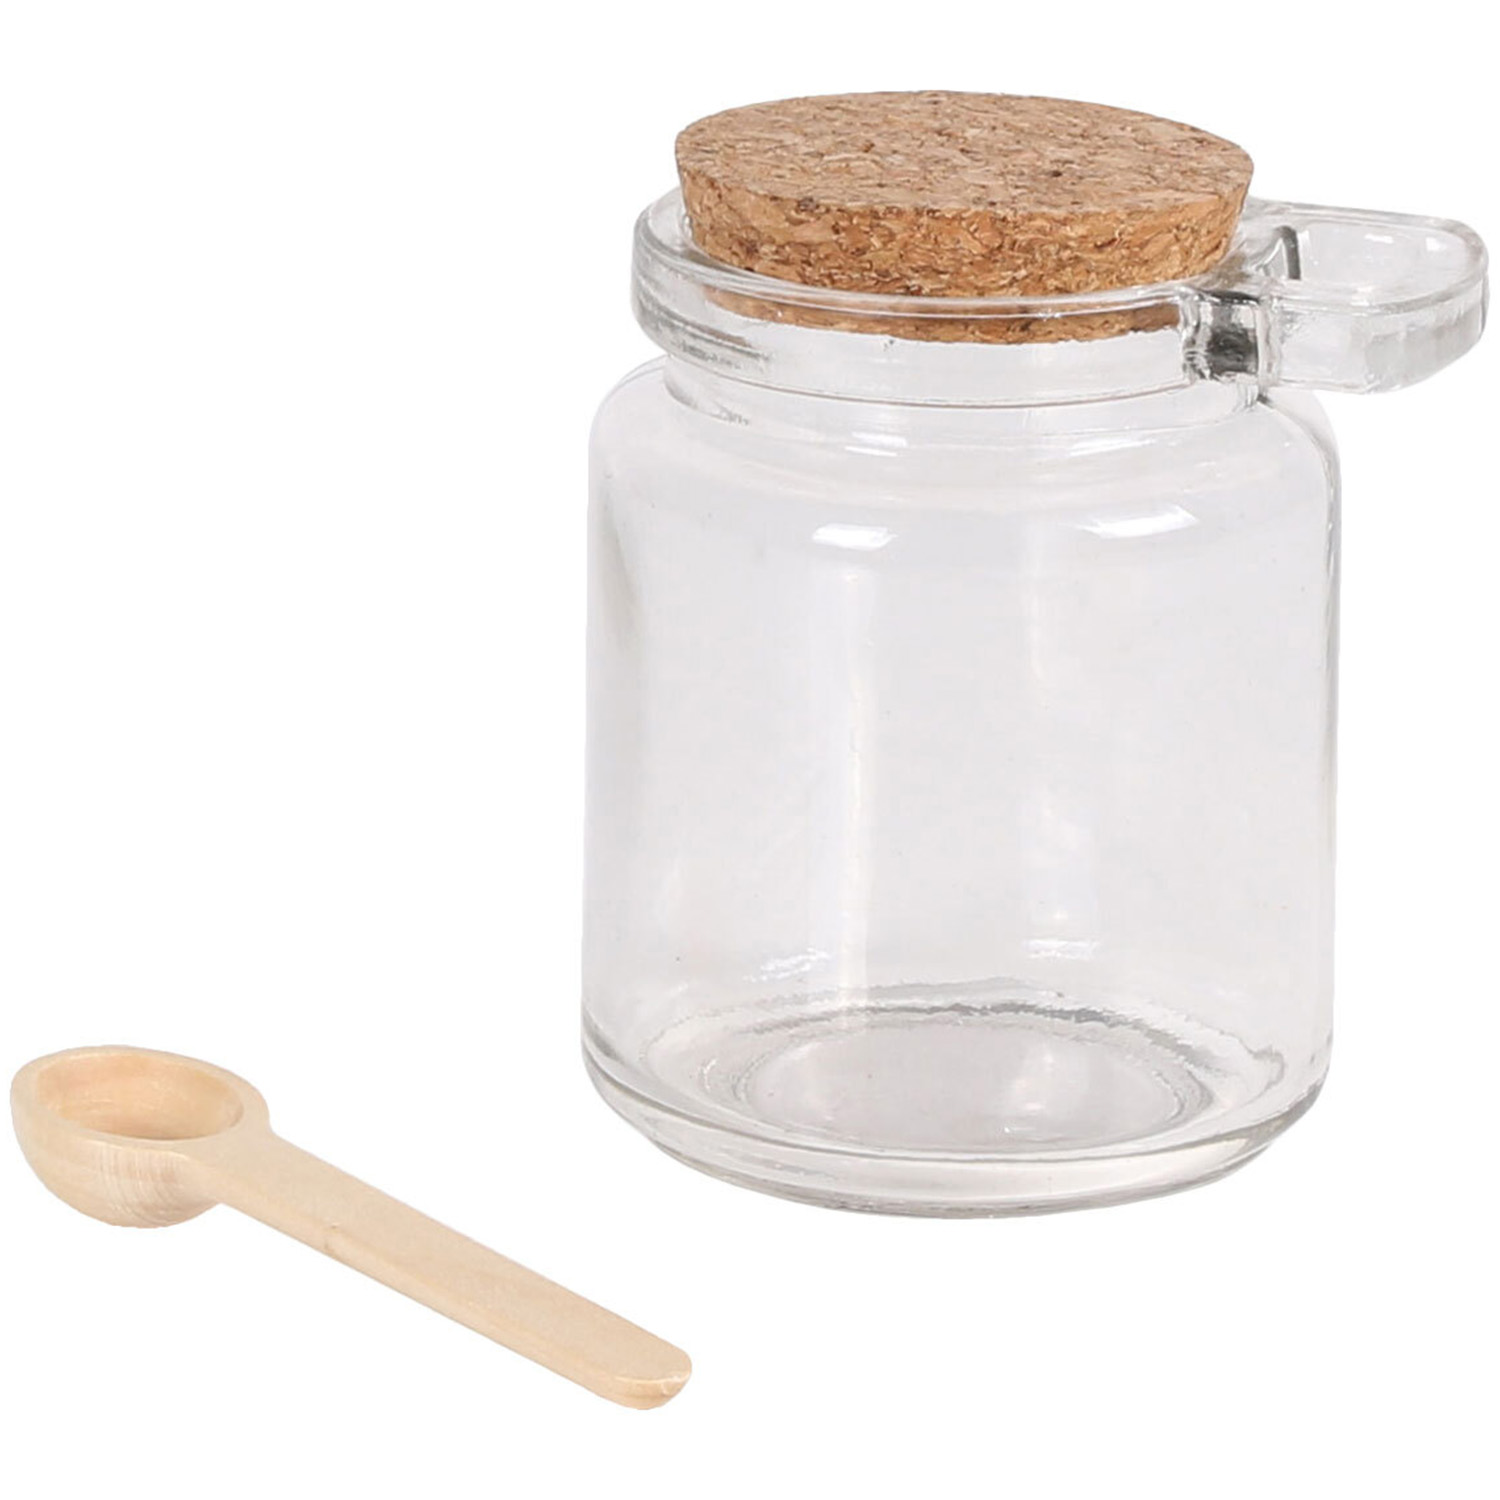 Cork Top Clear Storage Jar with Spoon Image 1